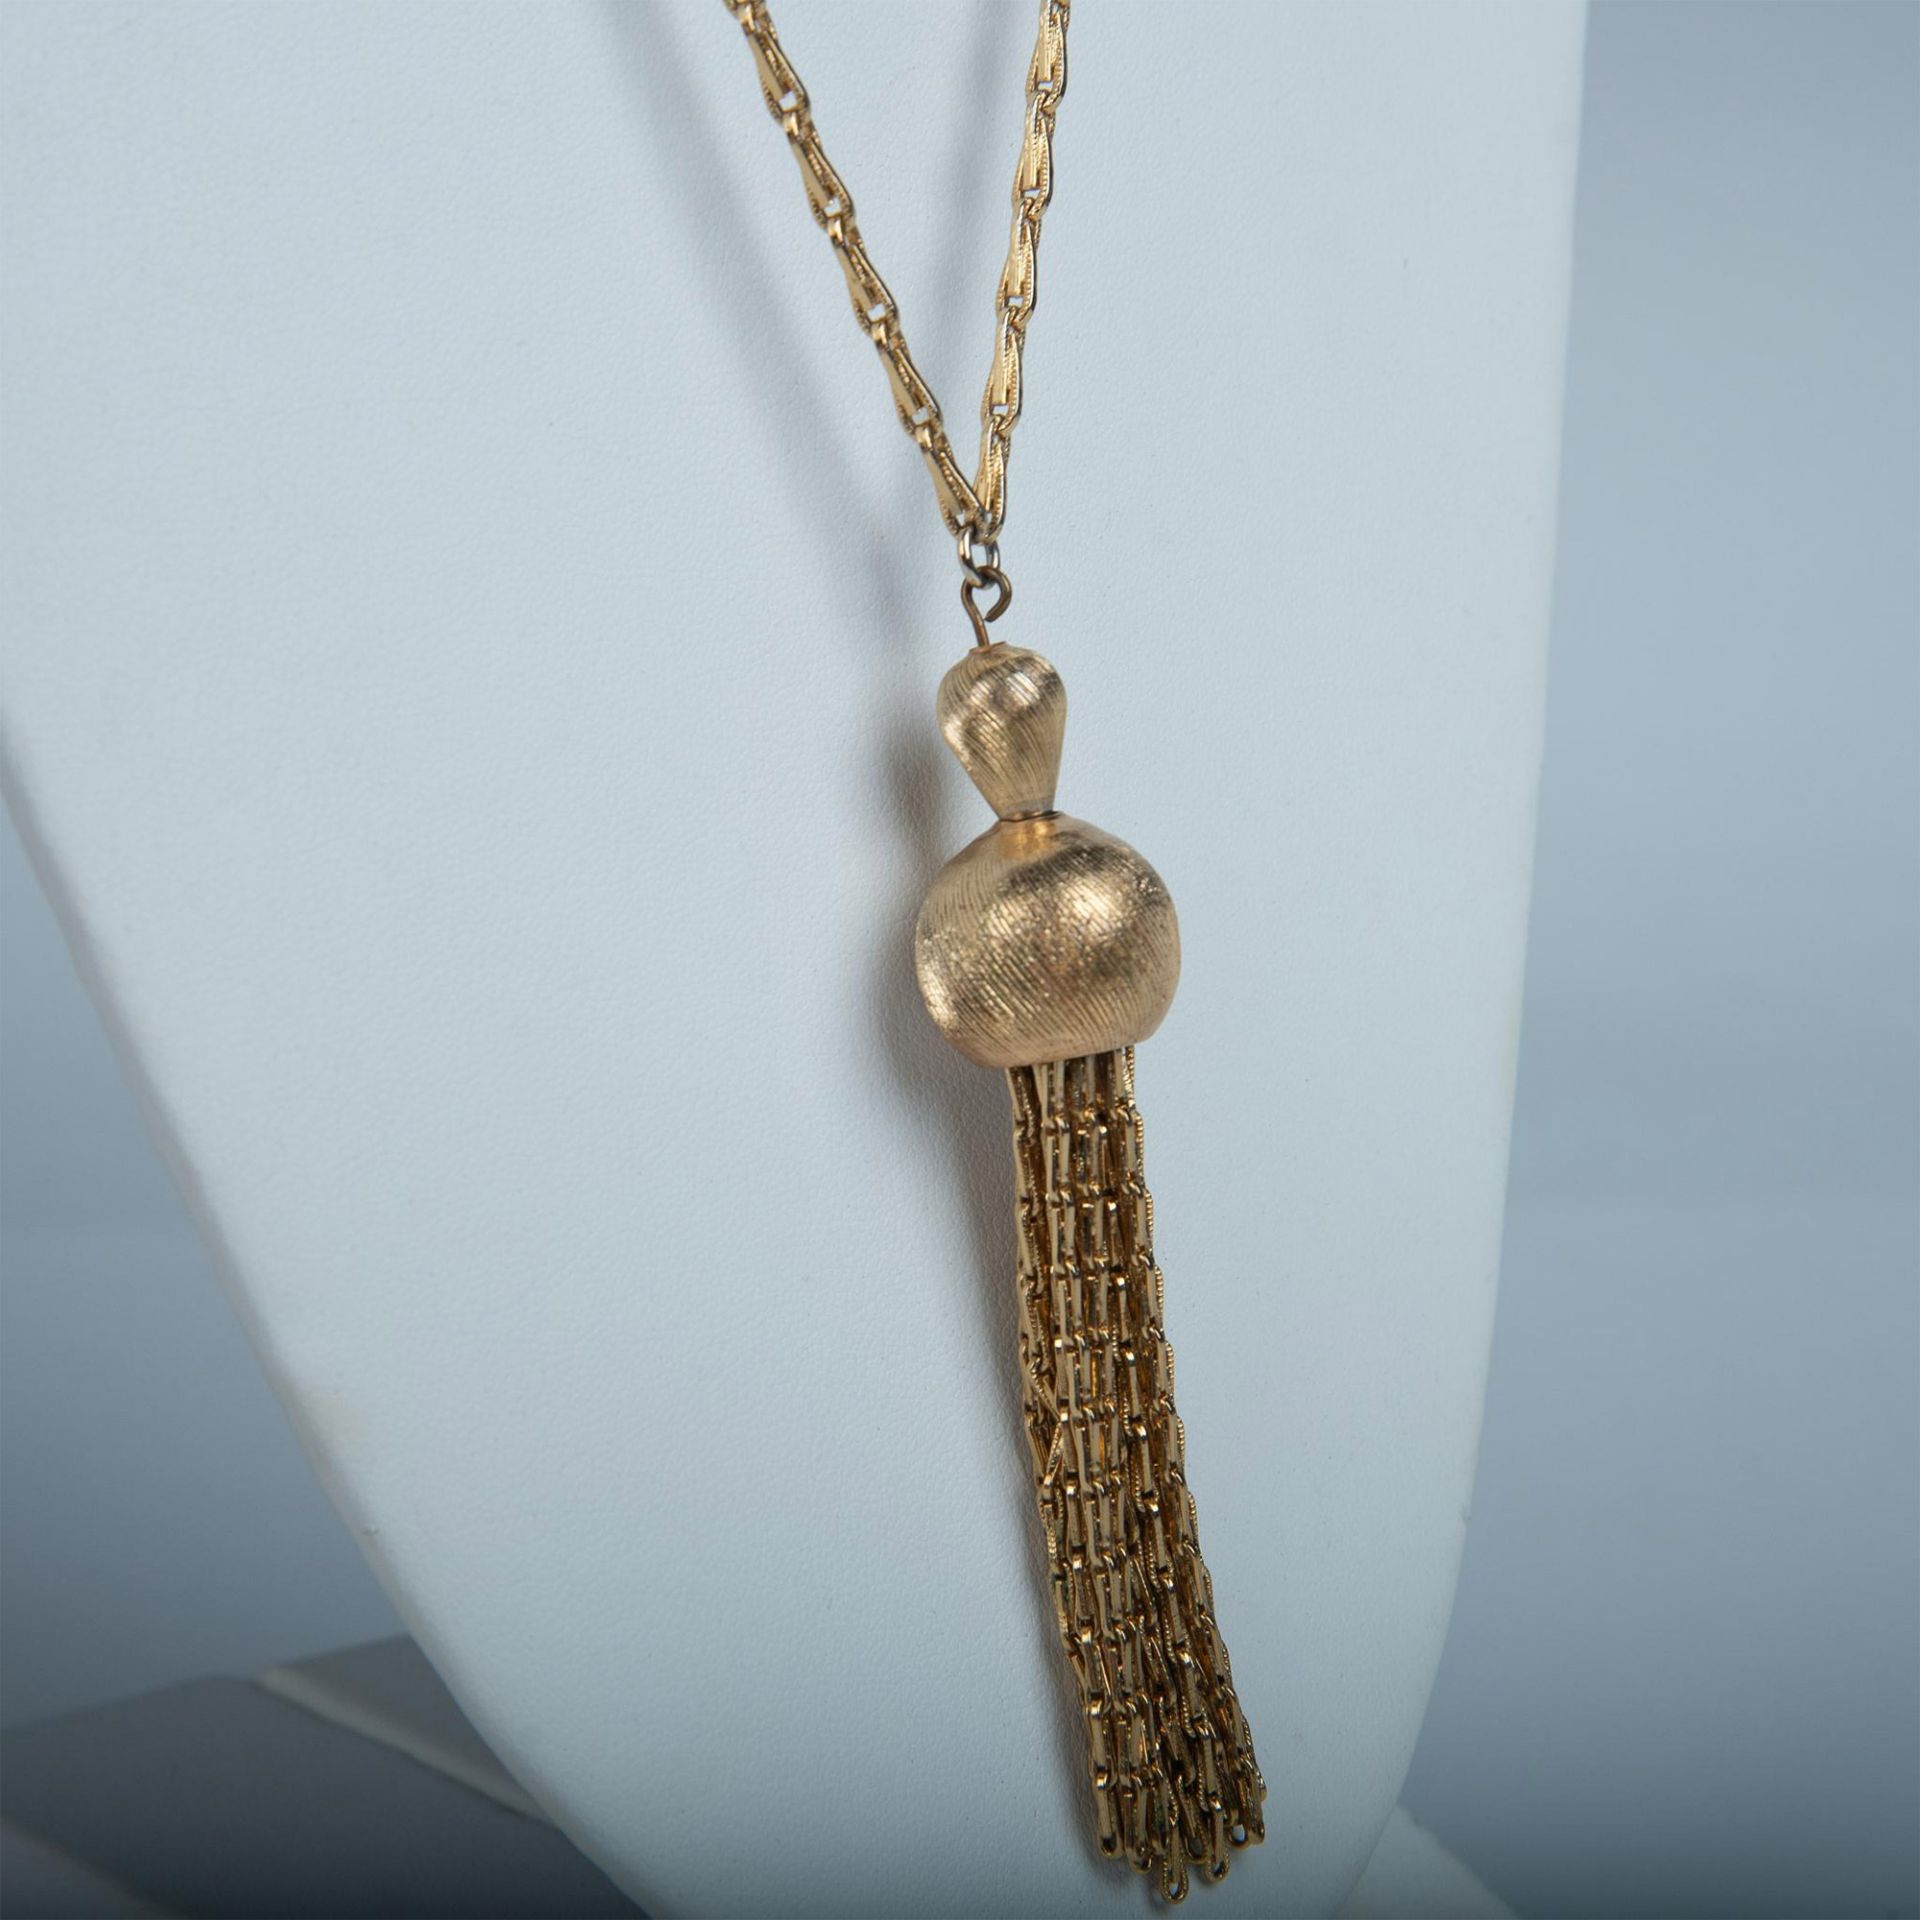 Monet Gold Metal Tassel Necklace - Image 2 of 4